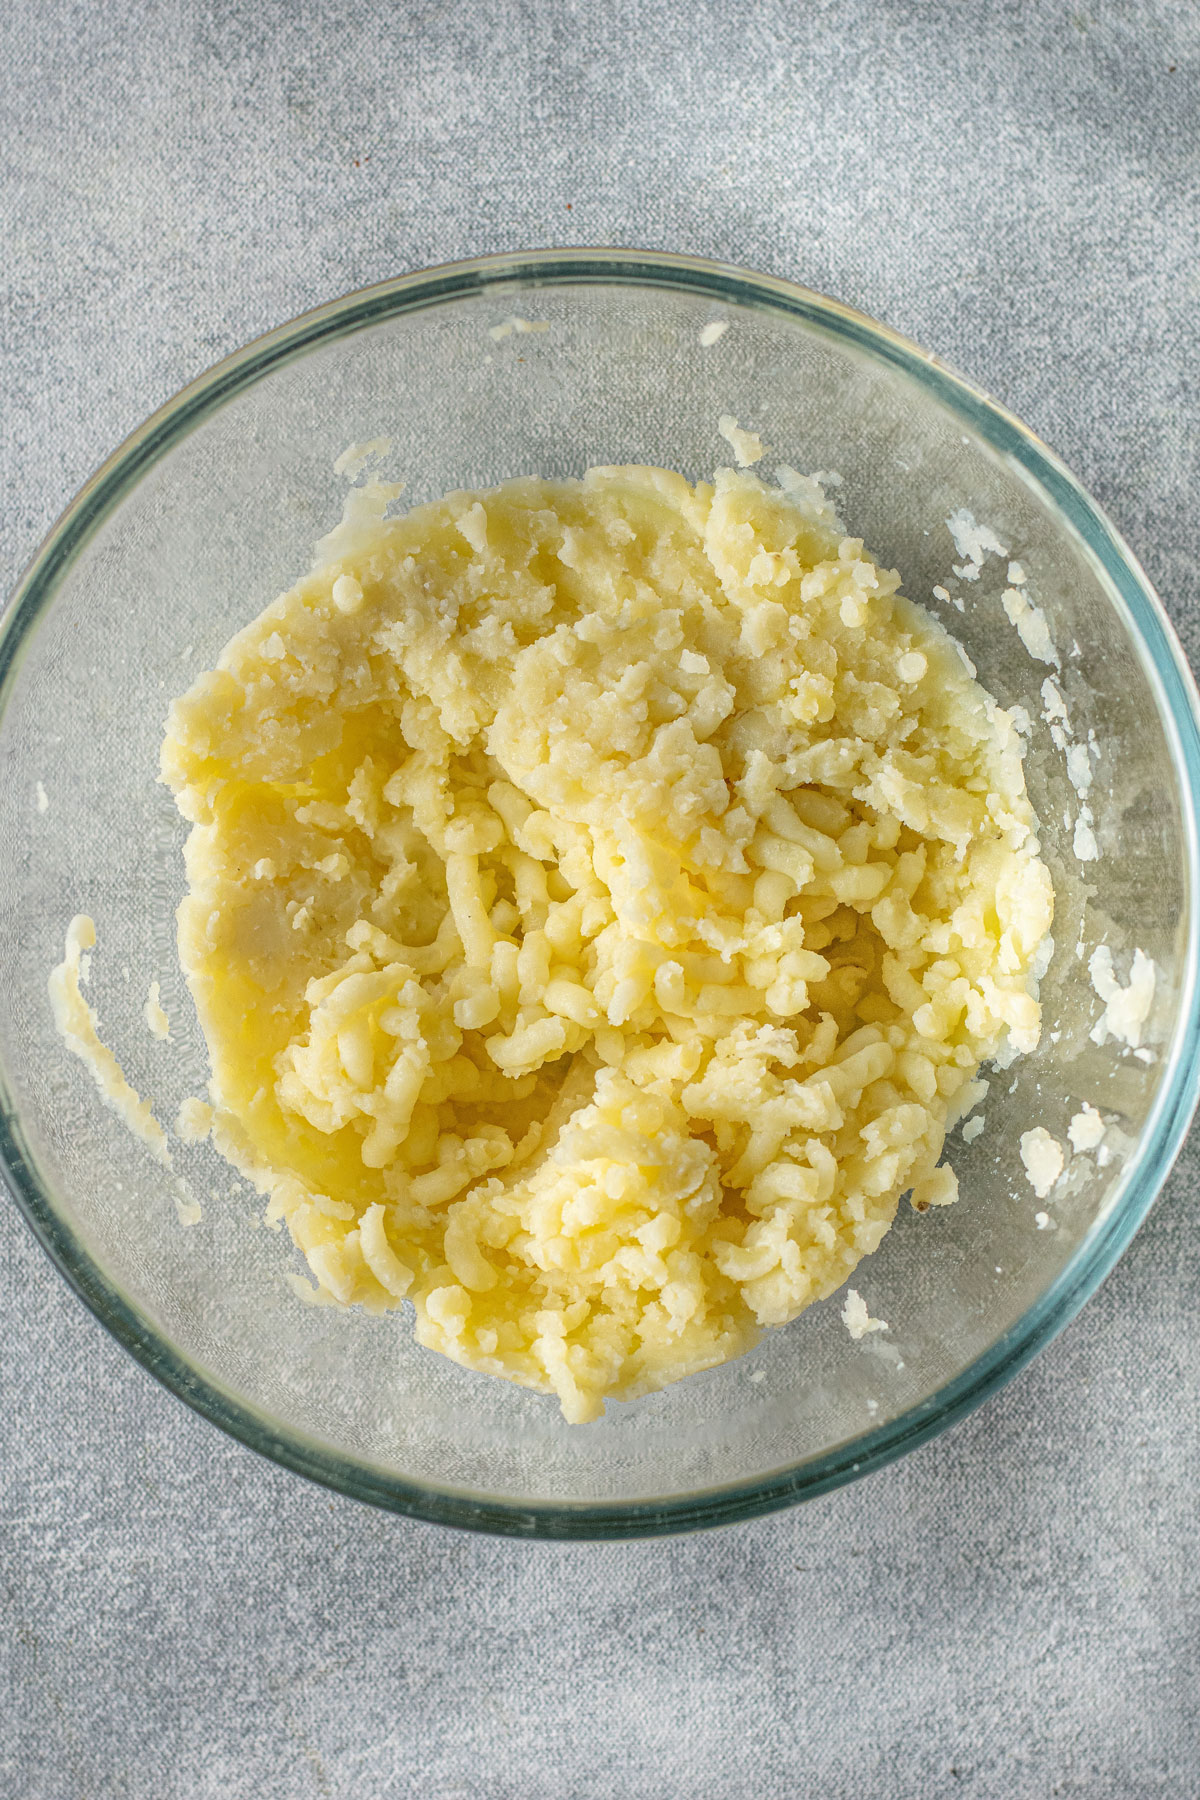 One process of preparing Instant Pot Garlic Mashed Potatoes.